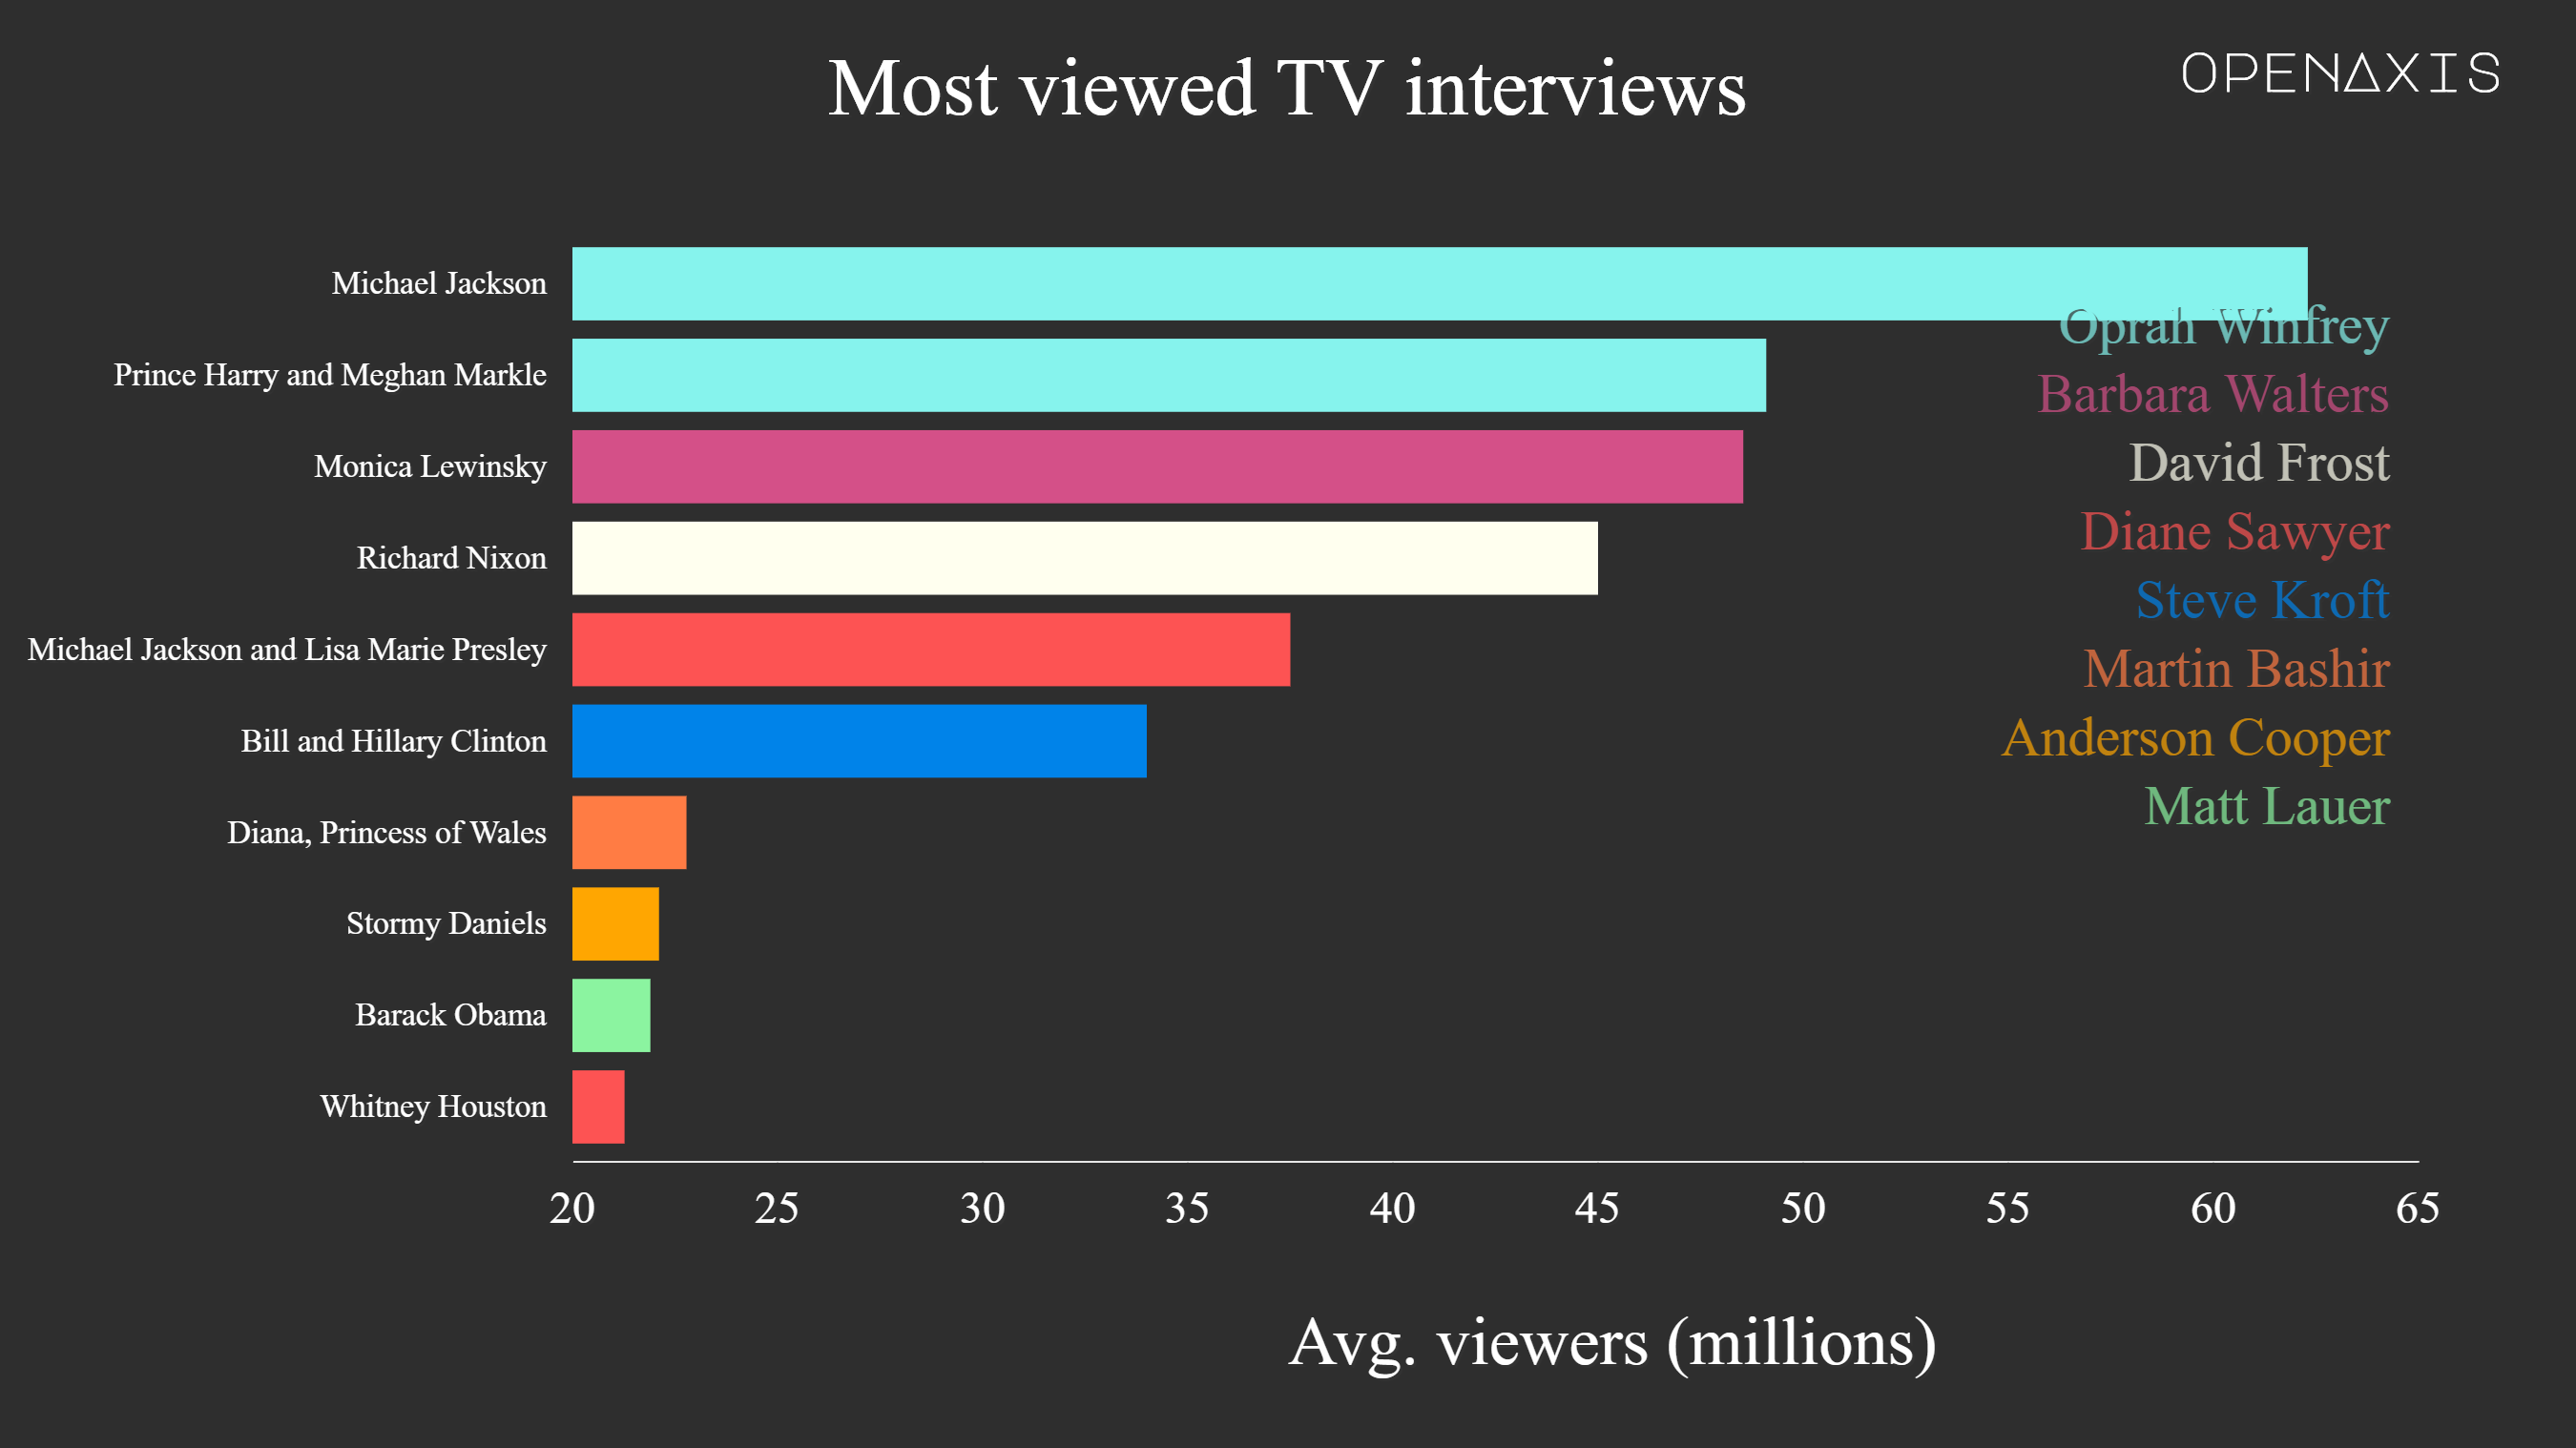 "Most viewed TV interviews"